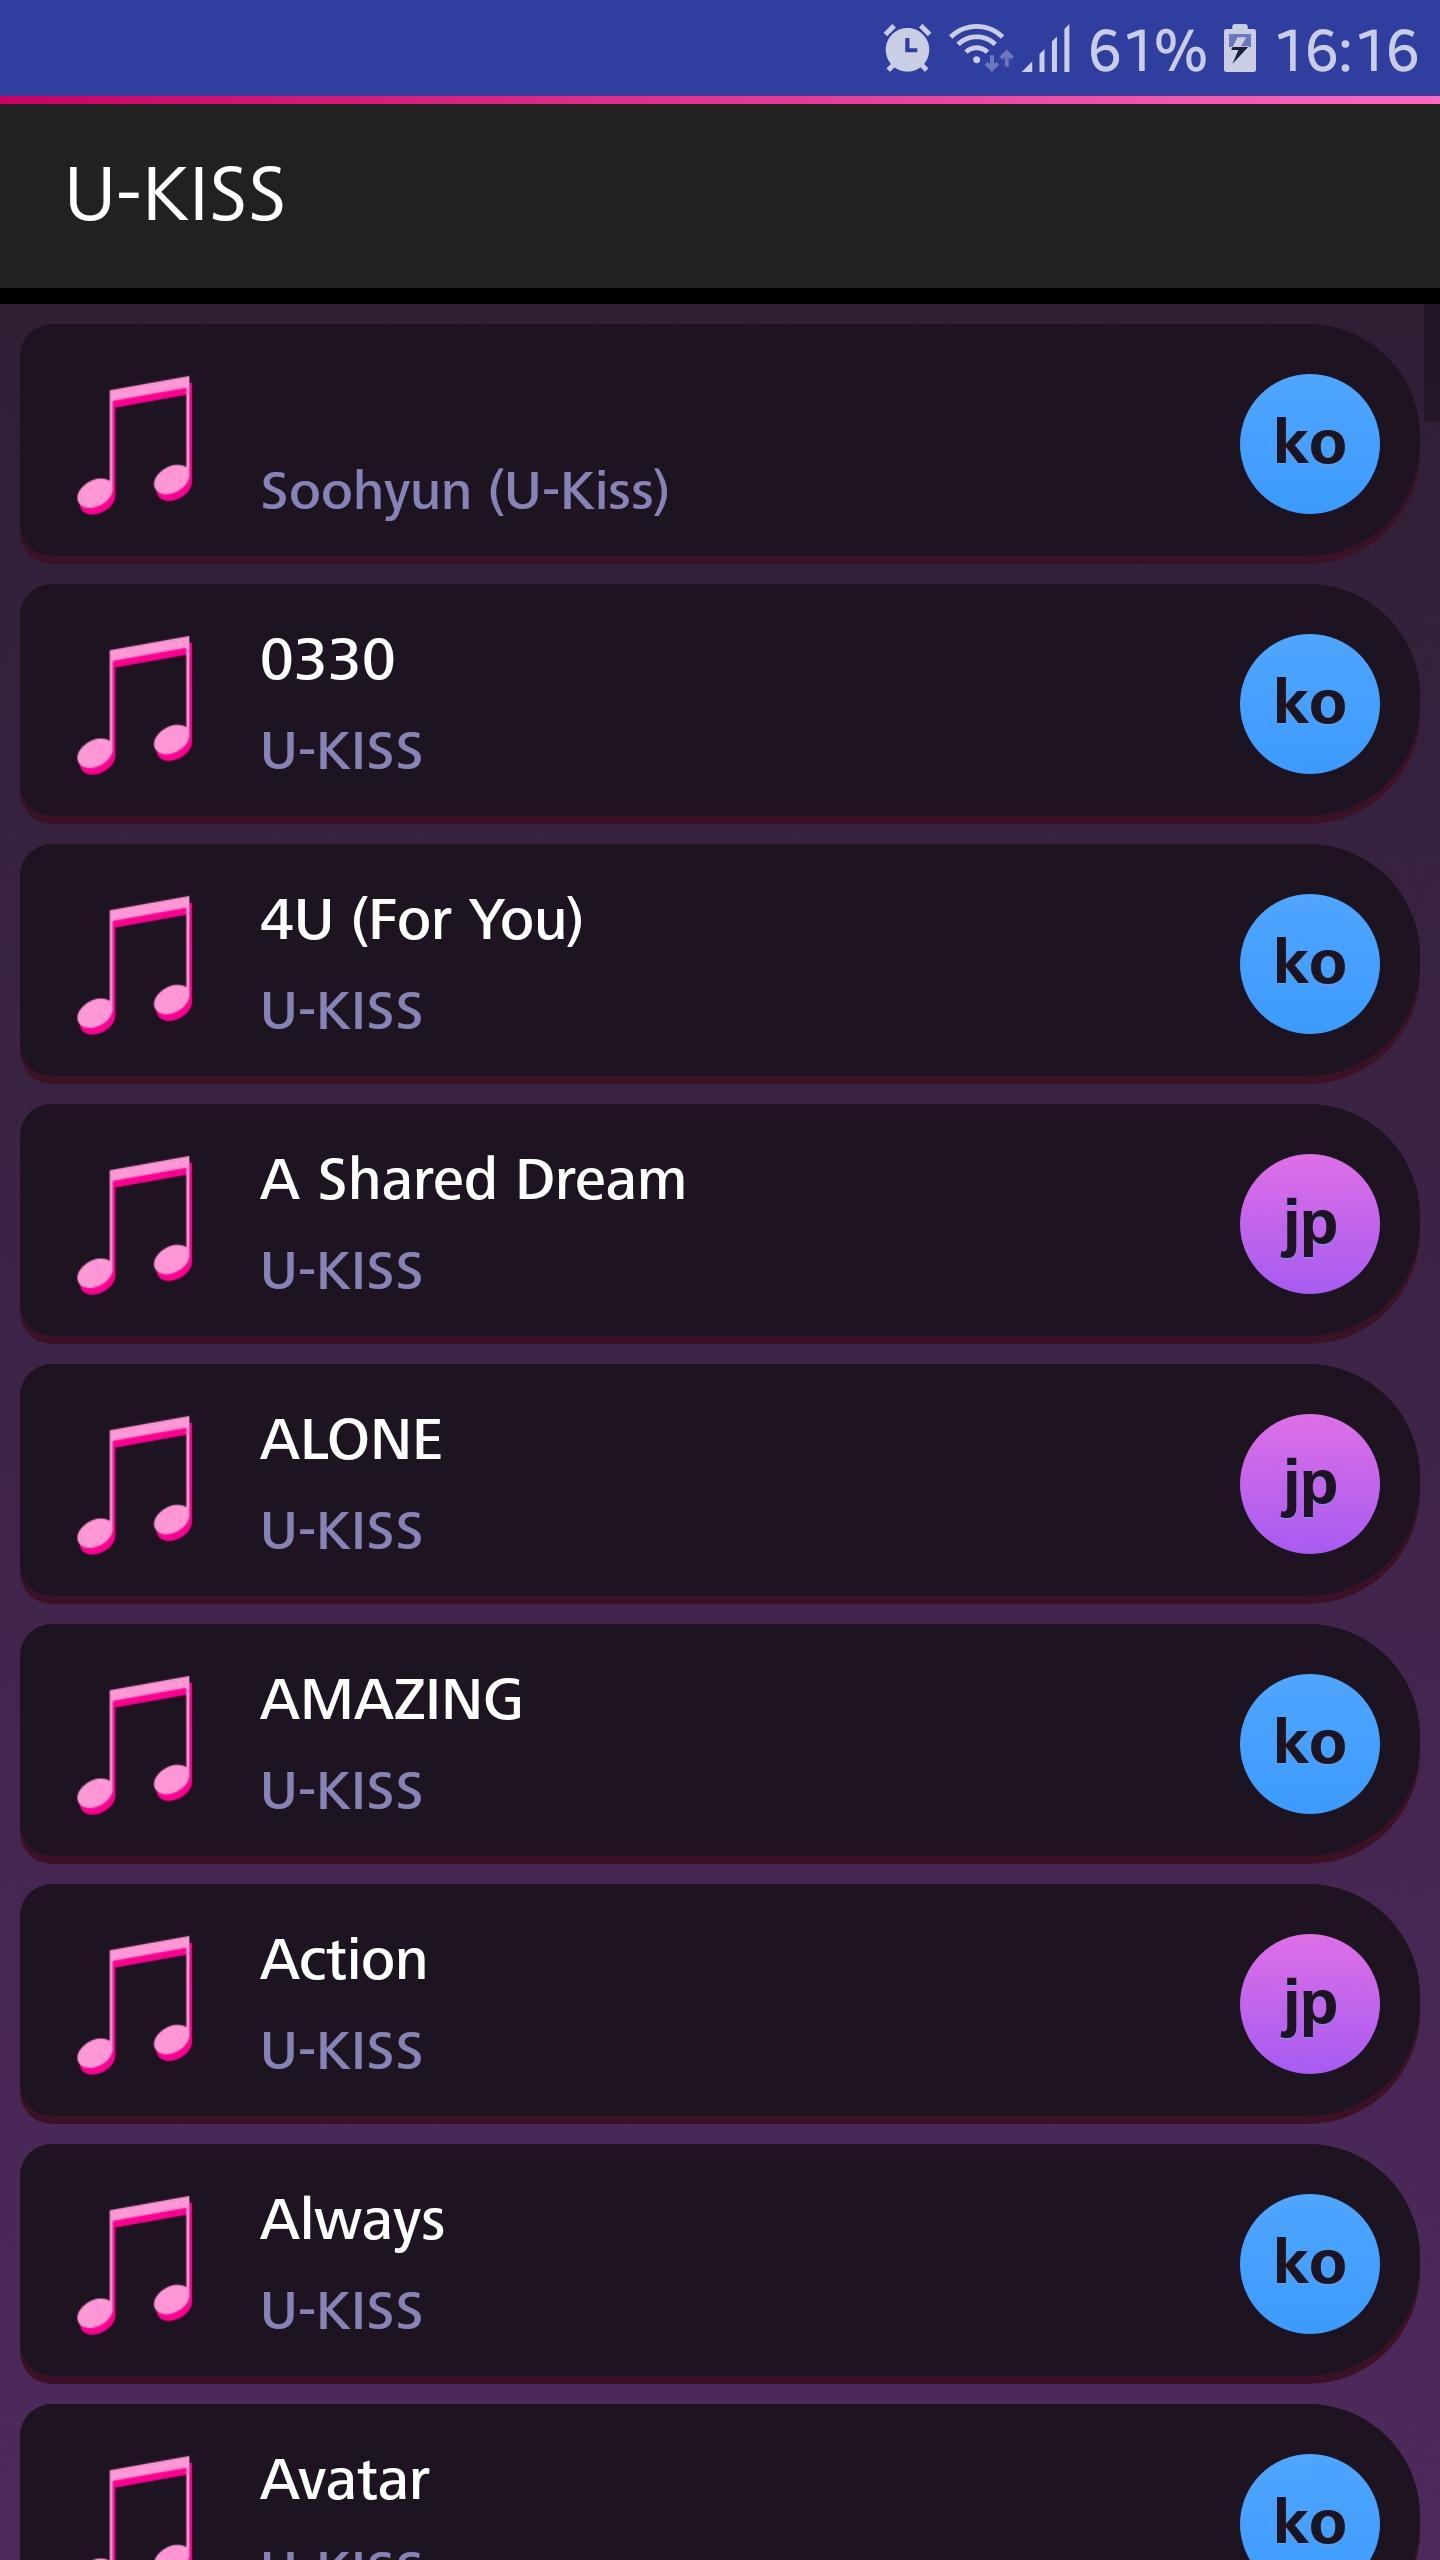 Lyrics for U-KISS (Offline) for Android - APK Download